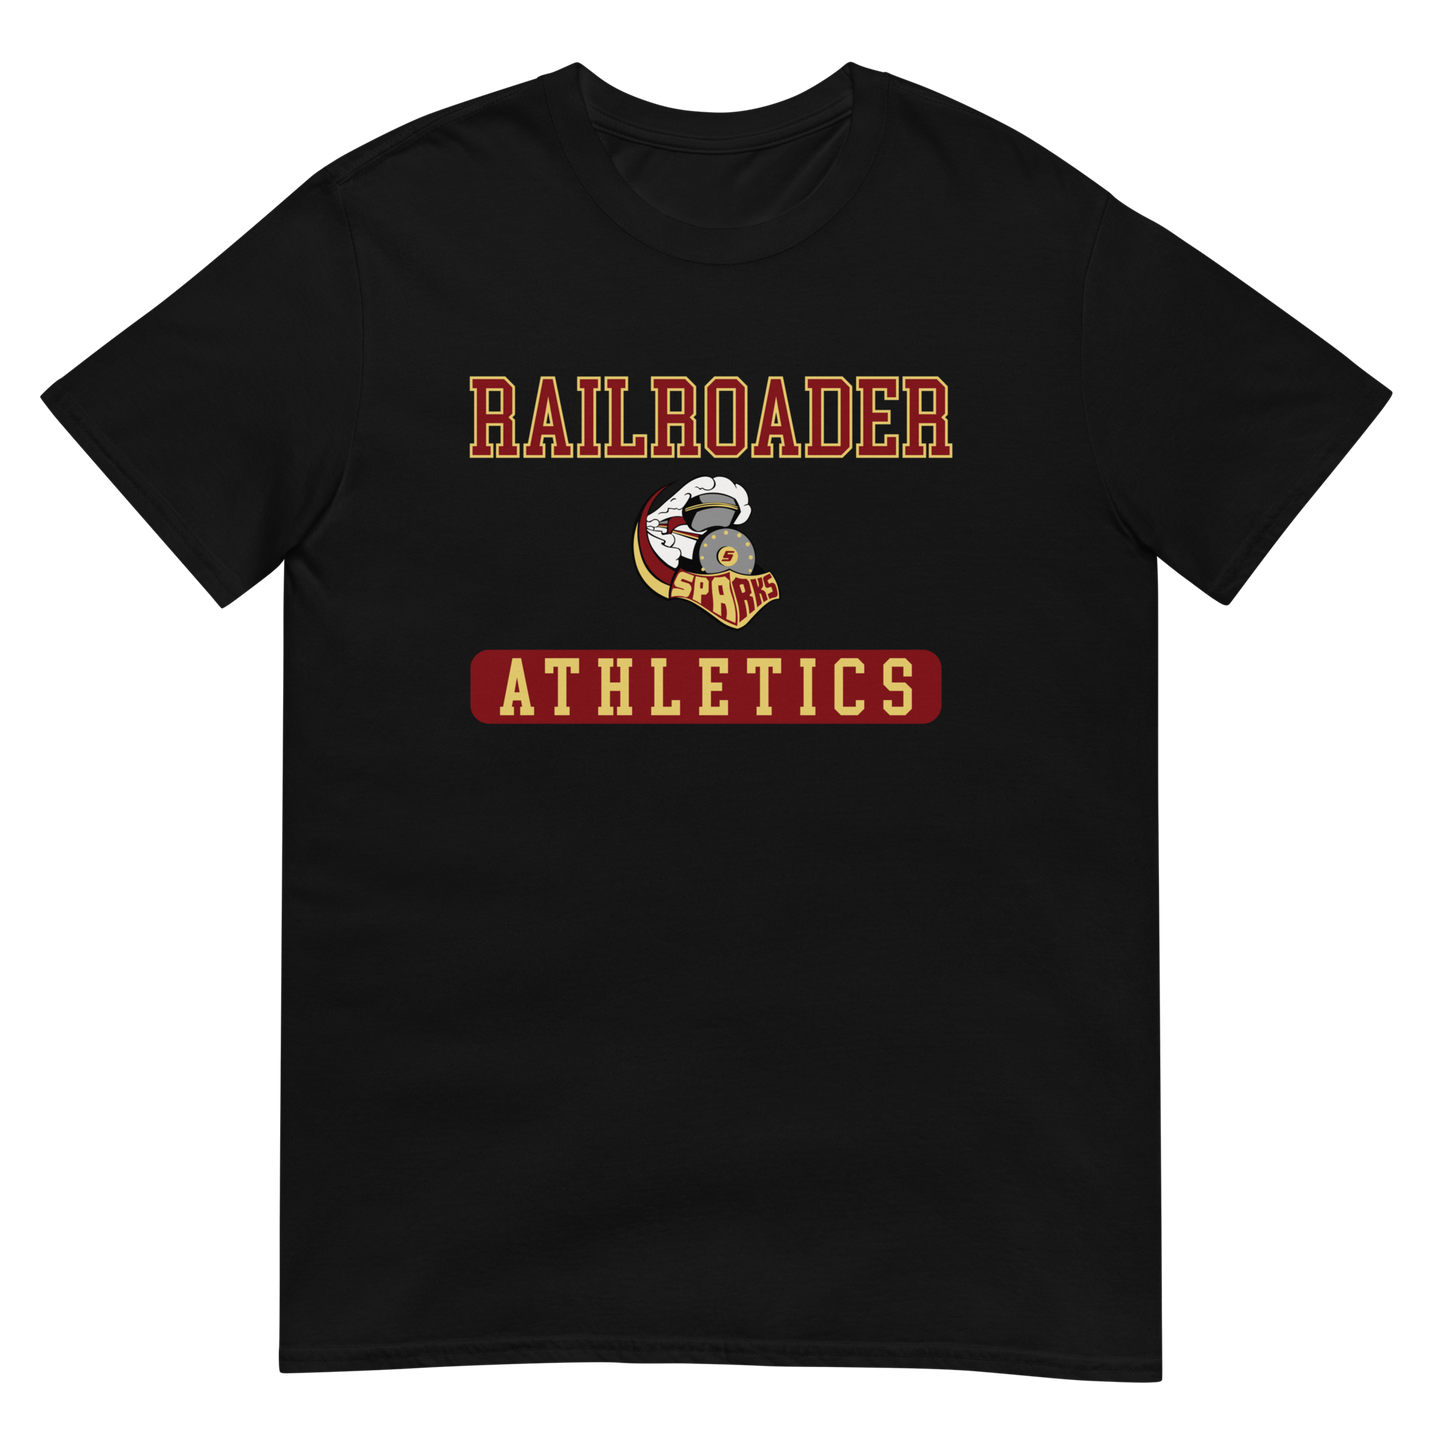 Railroaders Athletics Short-Sleeve Unisex T-Shirt